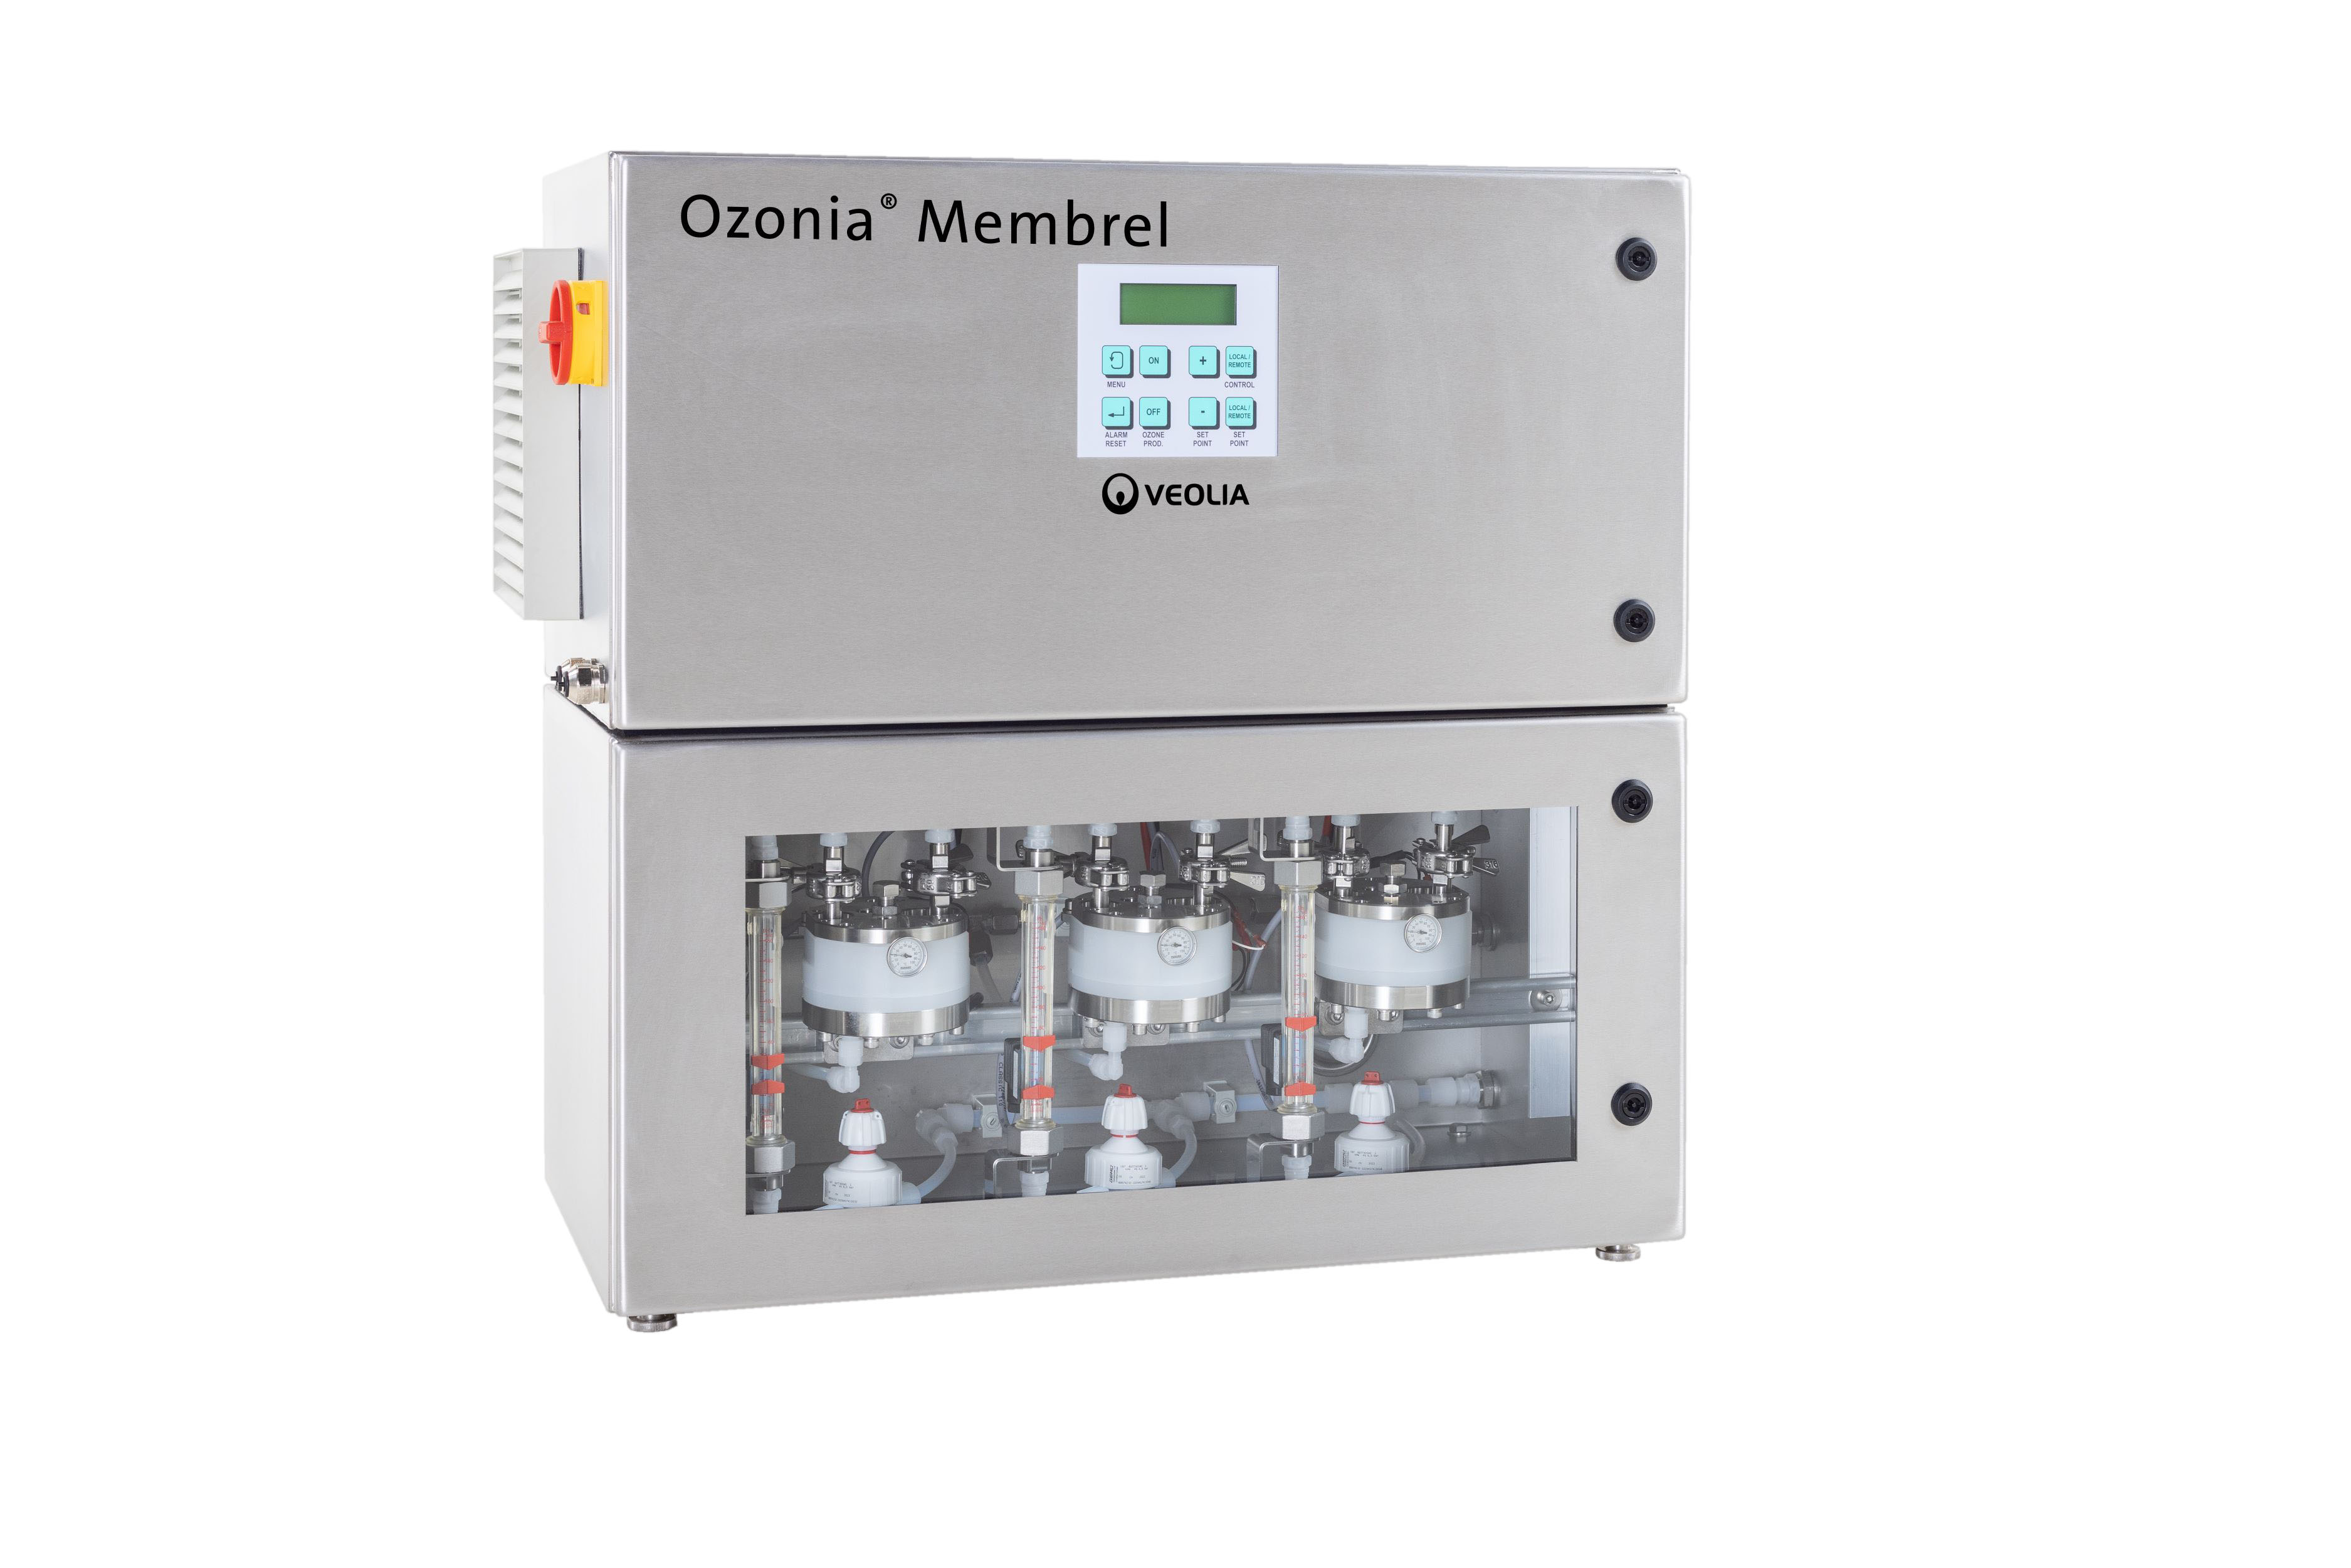 Ozonia Membrel MkV-S-3 - Electrolytic ozone generator, ozone output 3x 3-4 g/h, system unit